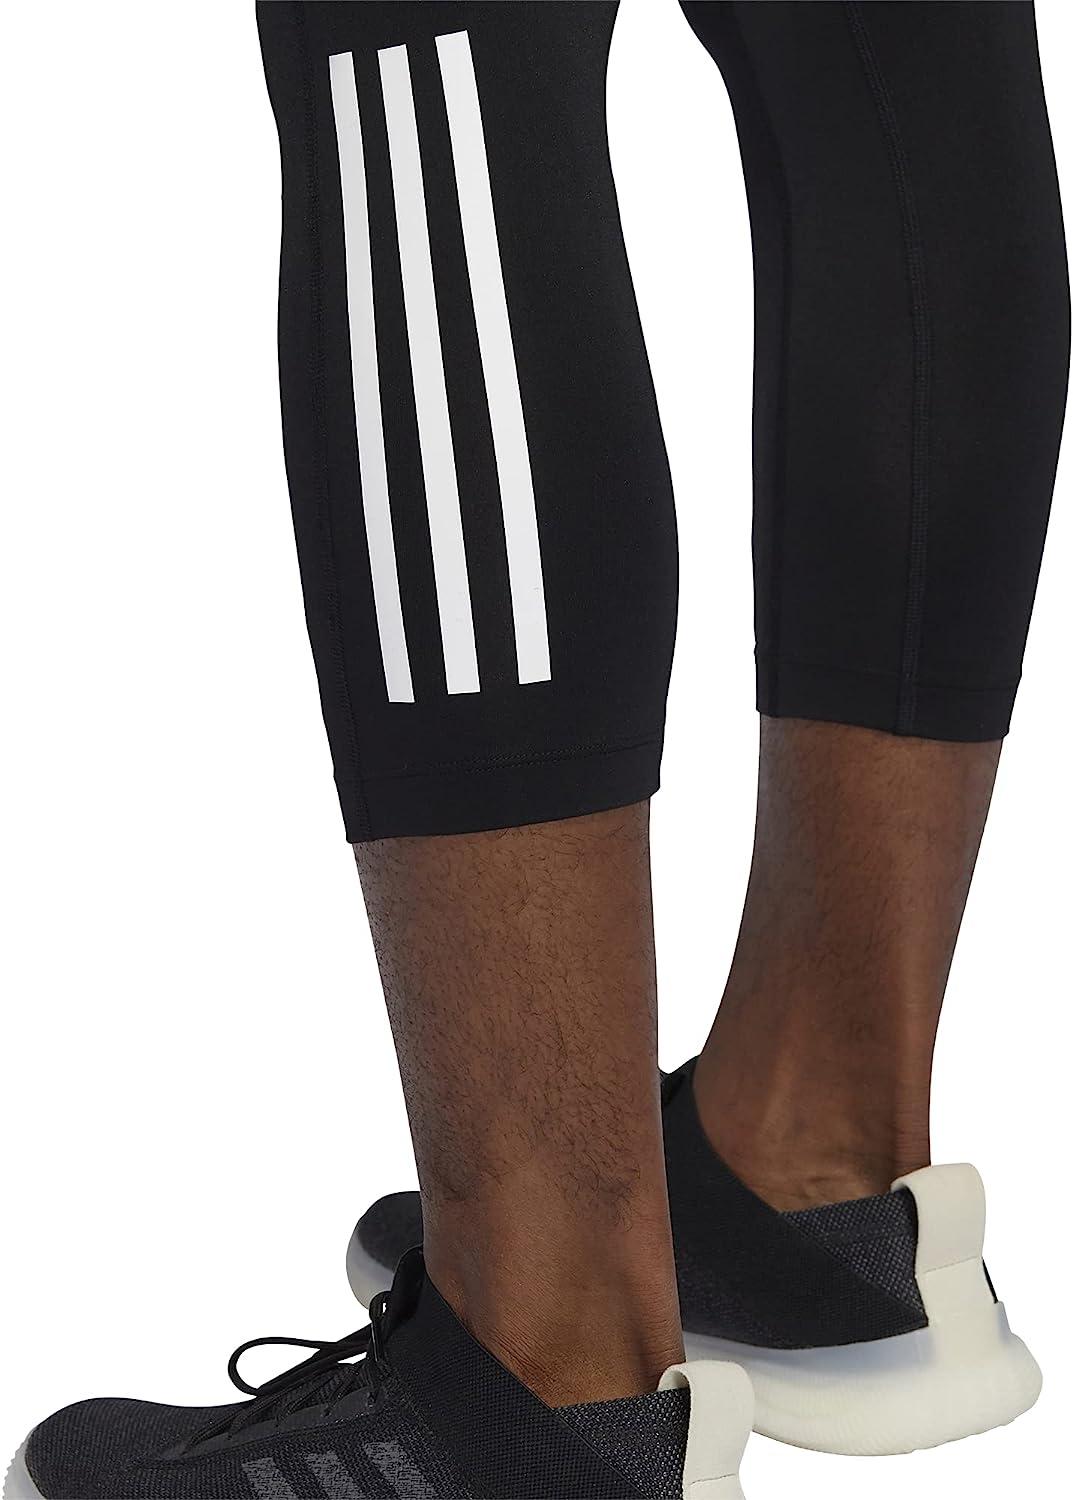  adidas Men's Techfit Tights, Black/Print, X-Large